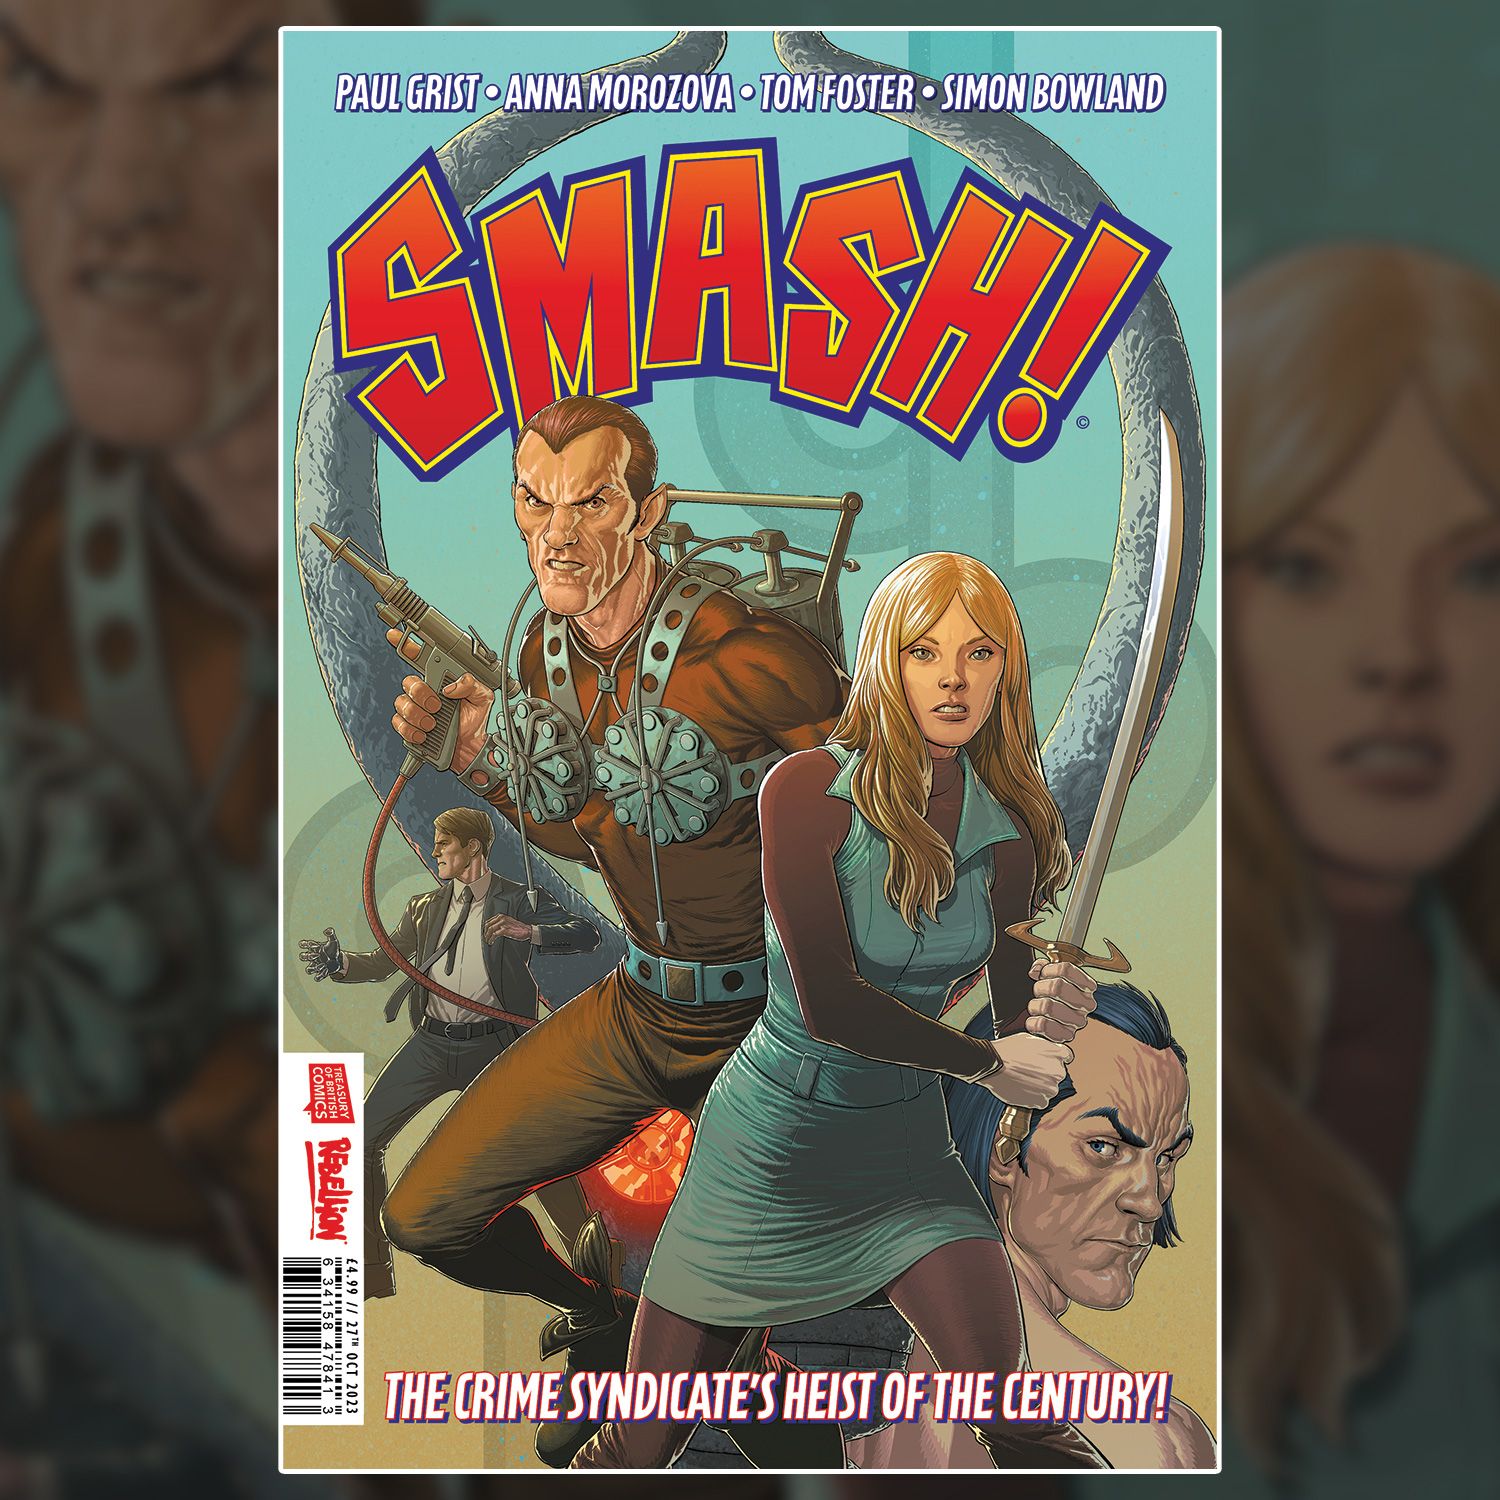 Smash! – new superhero mini-series launches in October